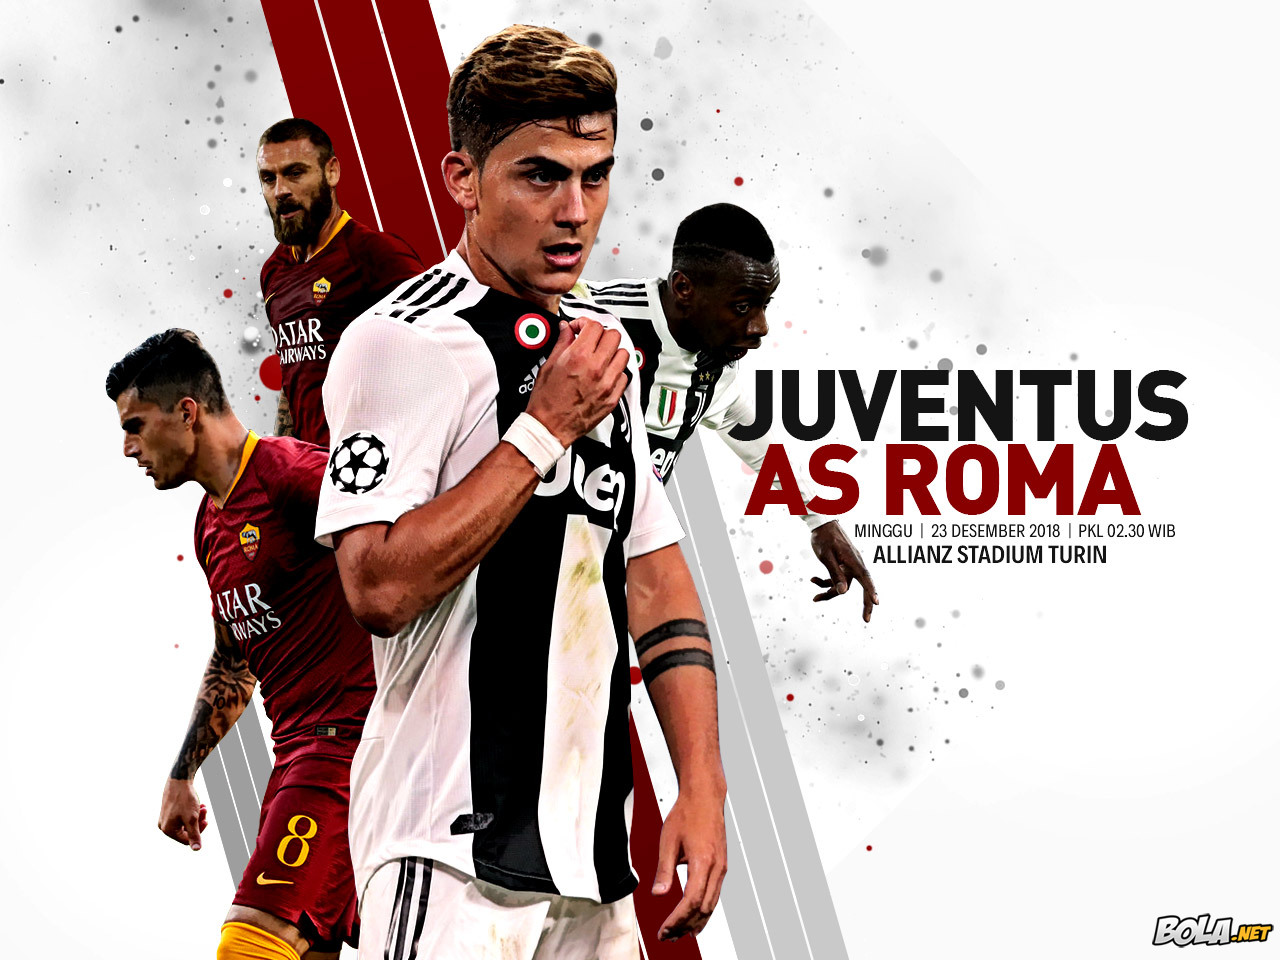 Deskripsi : Wallpaper Juventus Vs As Roma, size: 1280x960